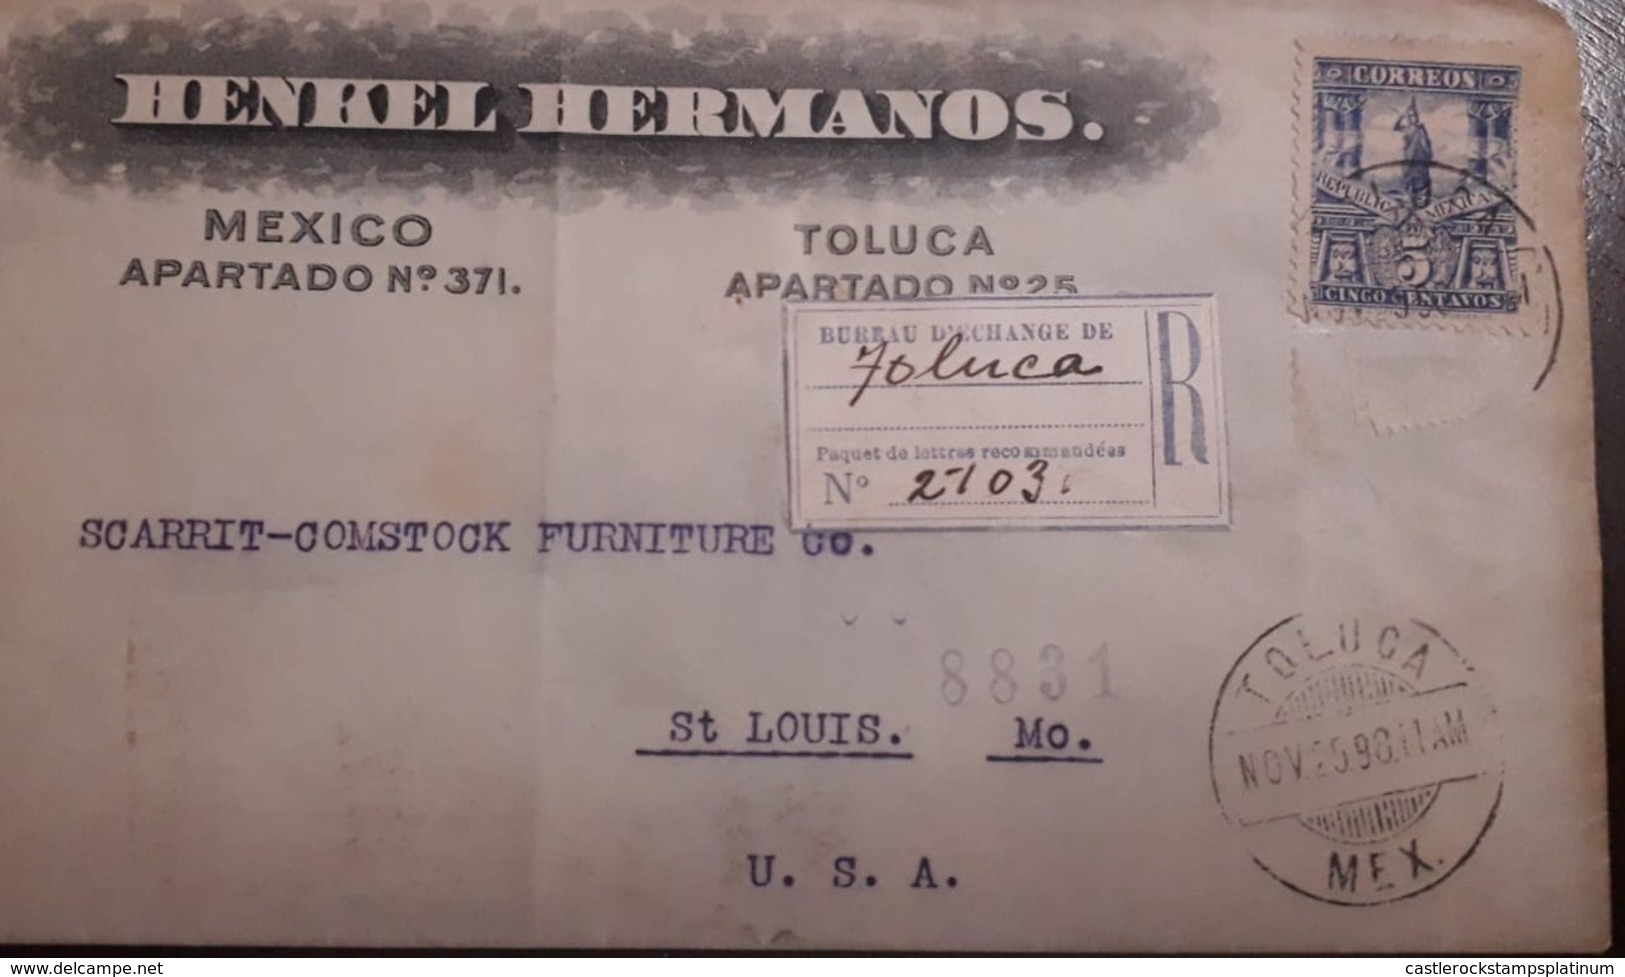 O) 1898 MEXICO, CUAUHTEMOC SC 247 5c, HENKEL HERMANOS - TOLUCA TO USA - Mexique